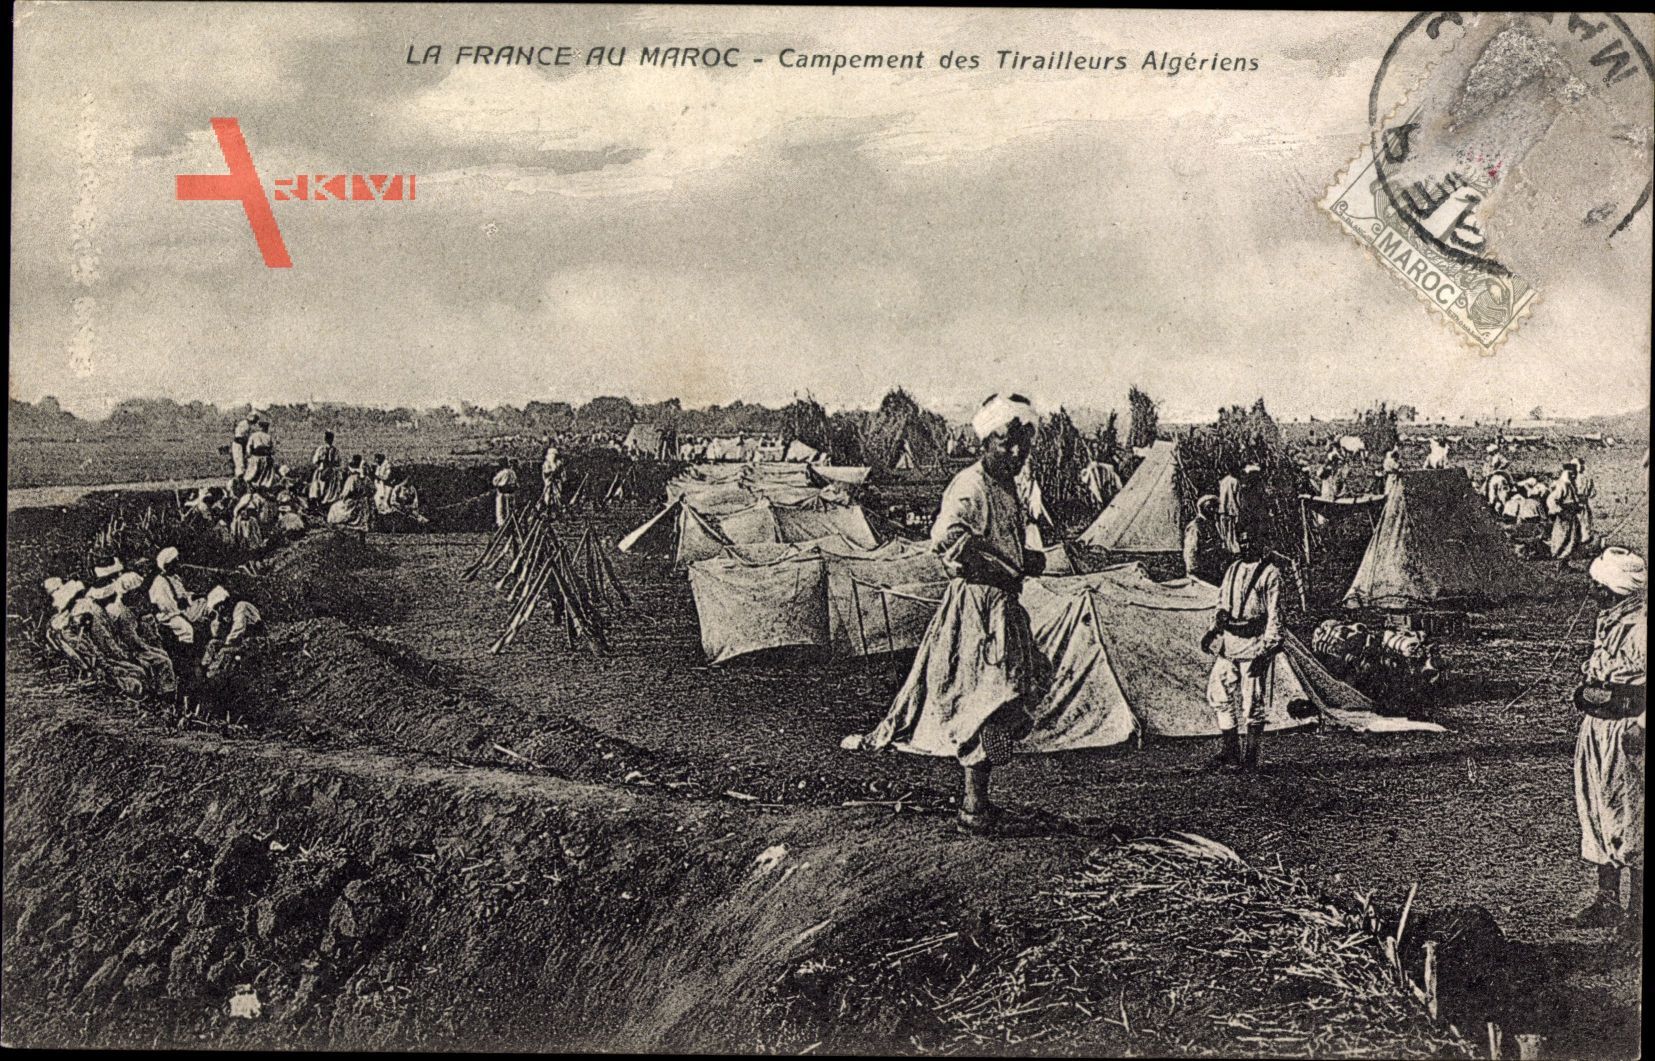 Marokko, Campements des Tirailleurs Algeriens, Infanterie, Militärlager